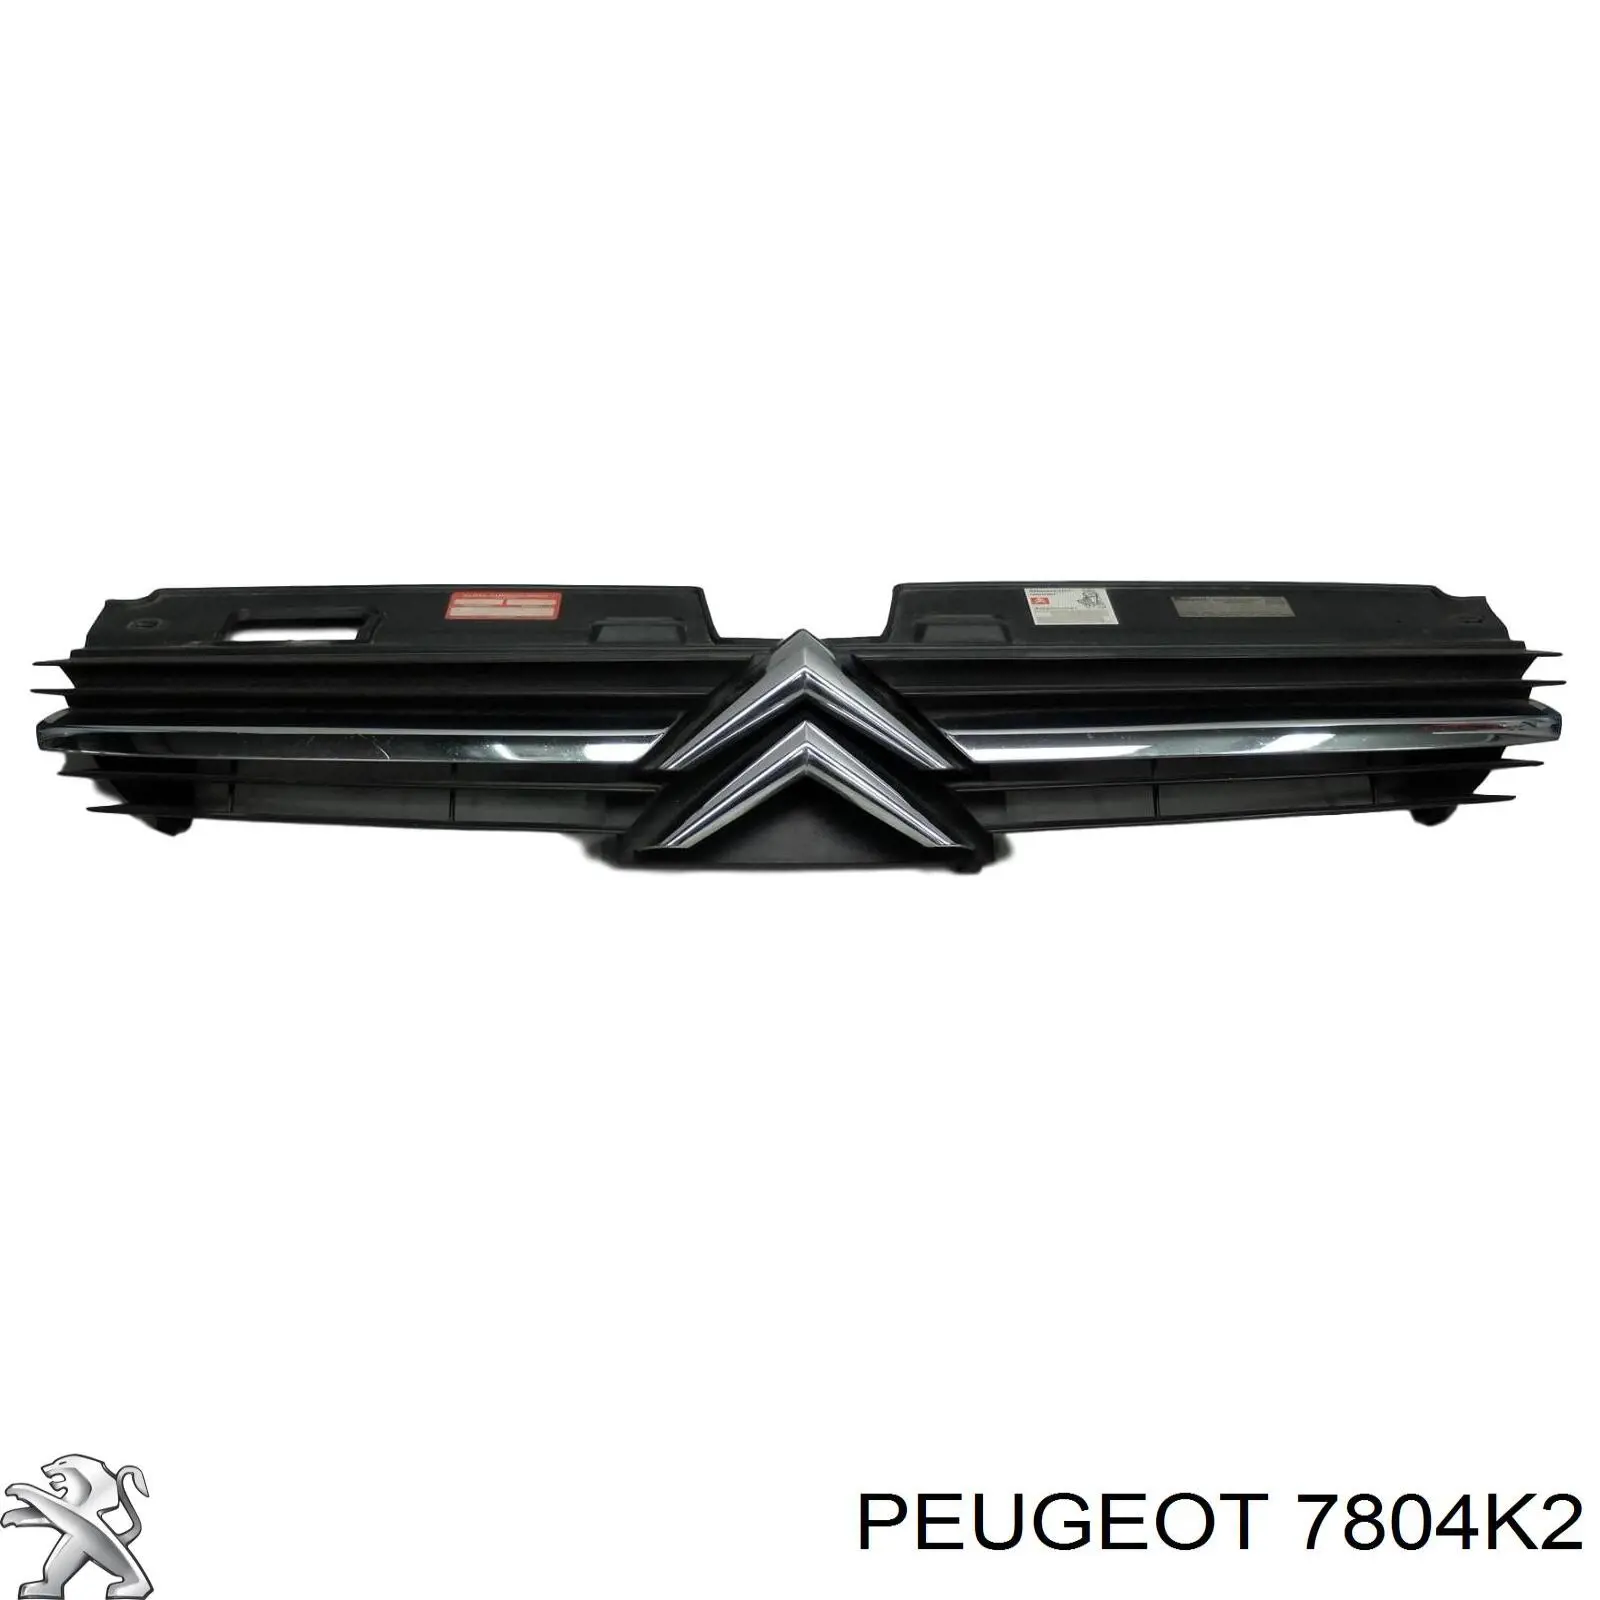 7804K2 Peugeot/Citroen grelha do radiador